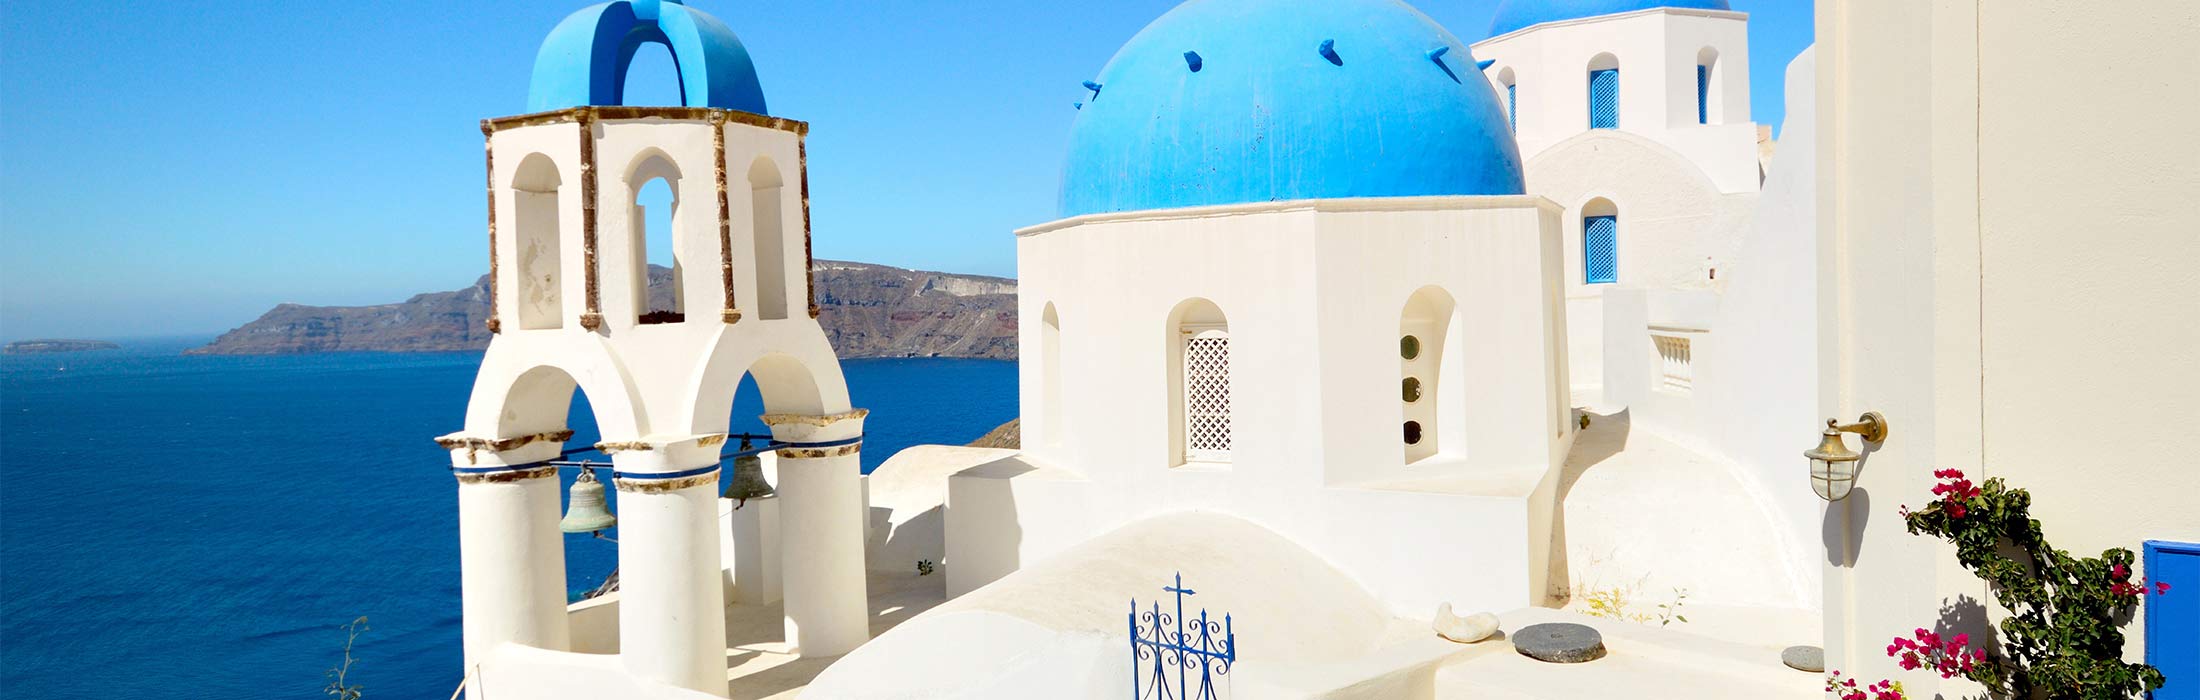 top yacht charter destinations mediterranean greece cyclades naxos main slider 2